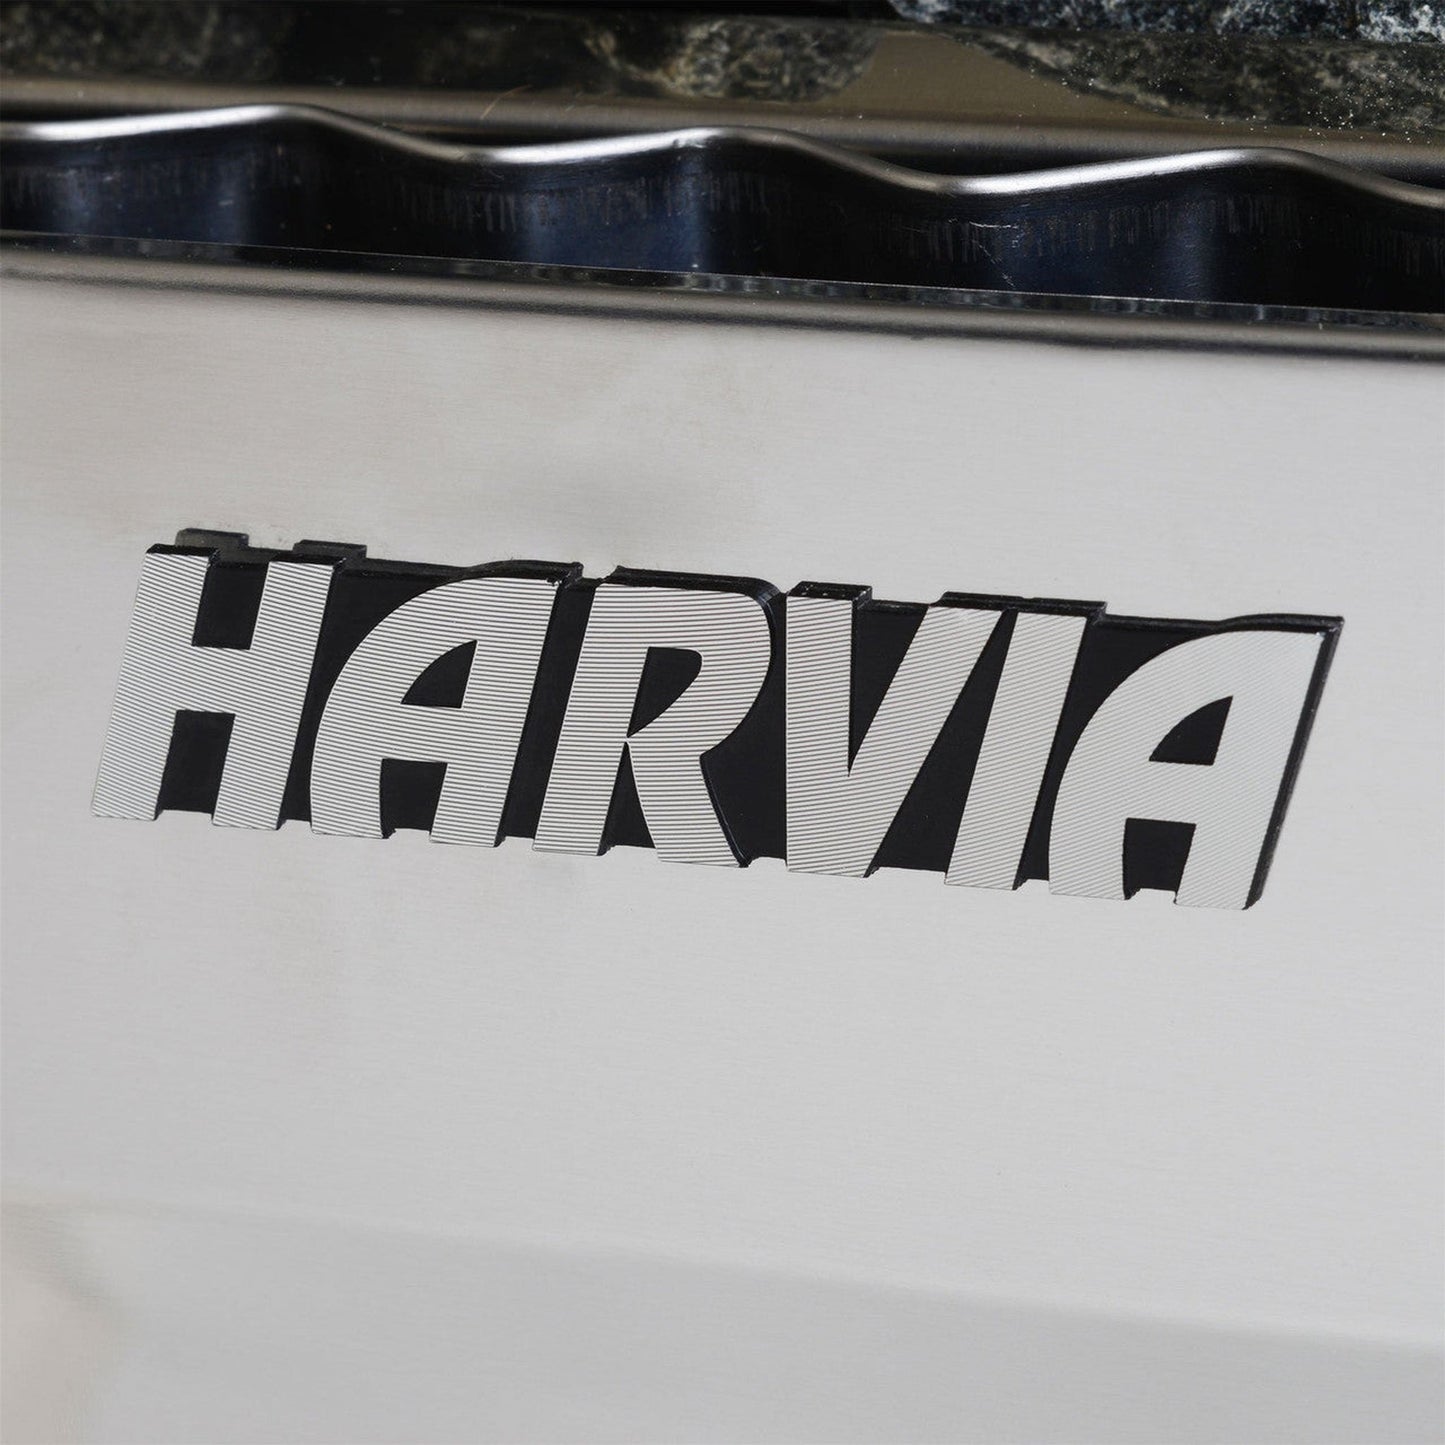 Aleko Harvia KIP 6 kW Wet Dry Sauna Heater Stove With Digital Controller